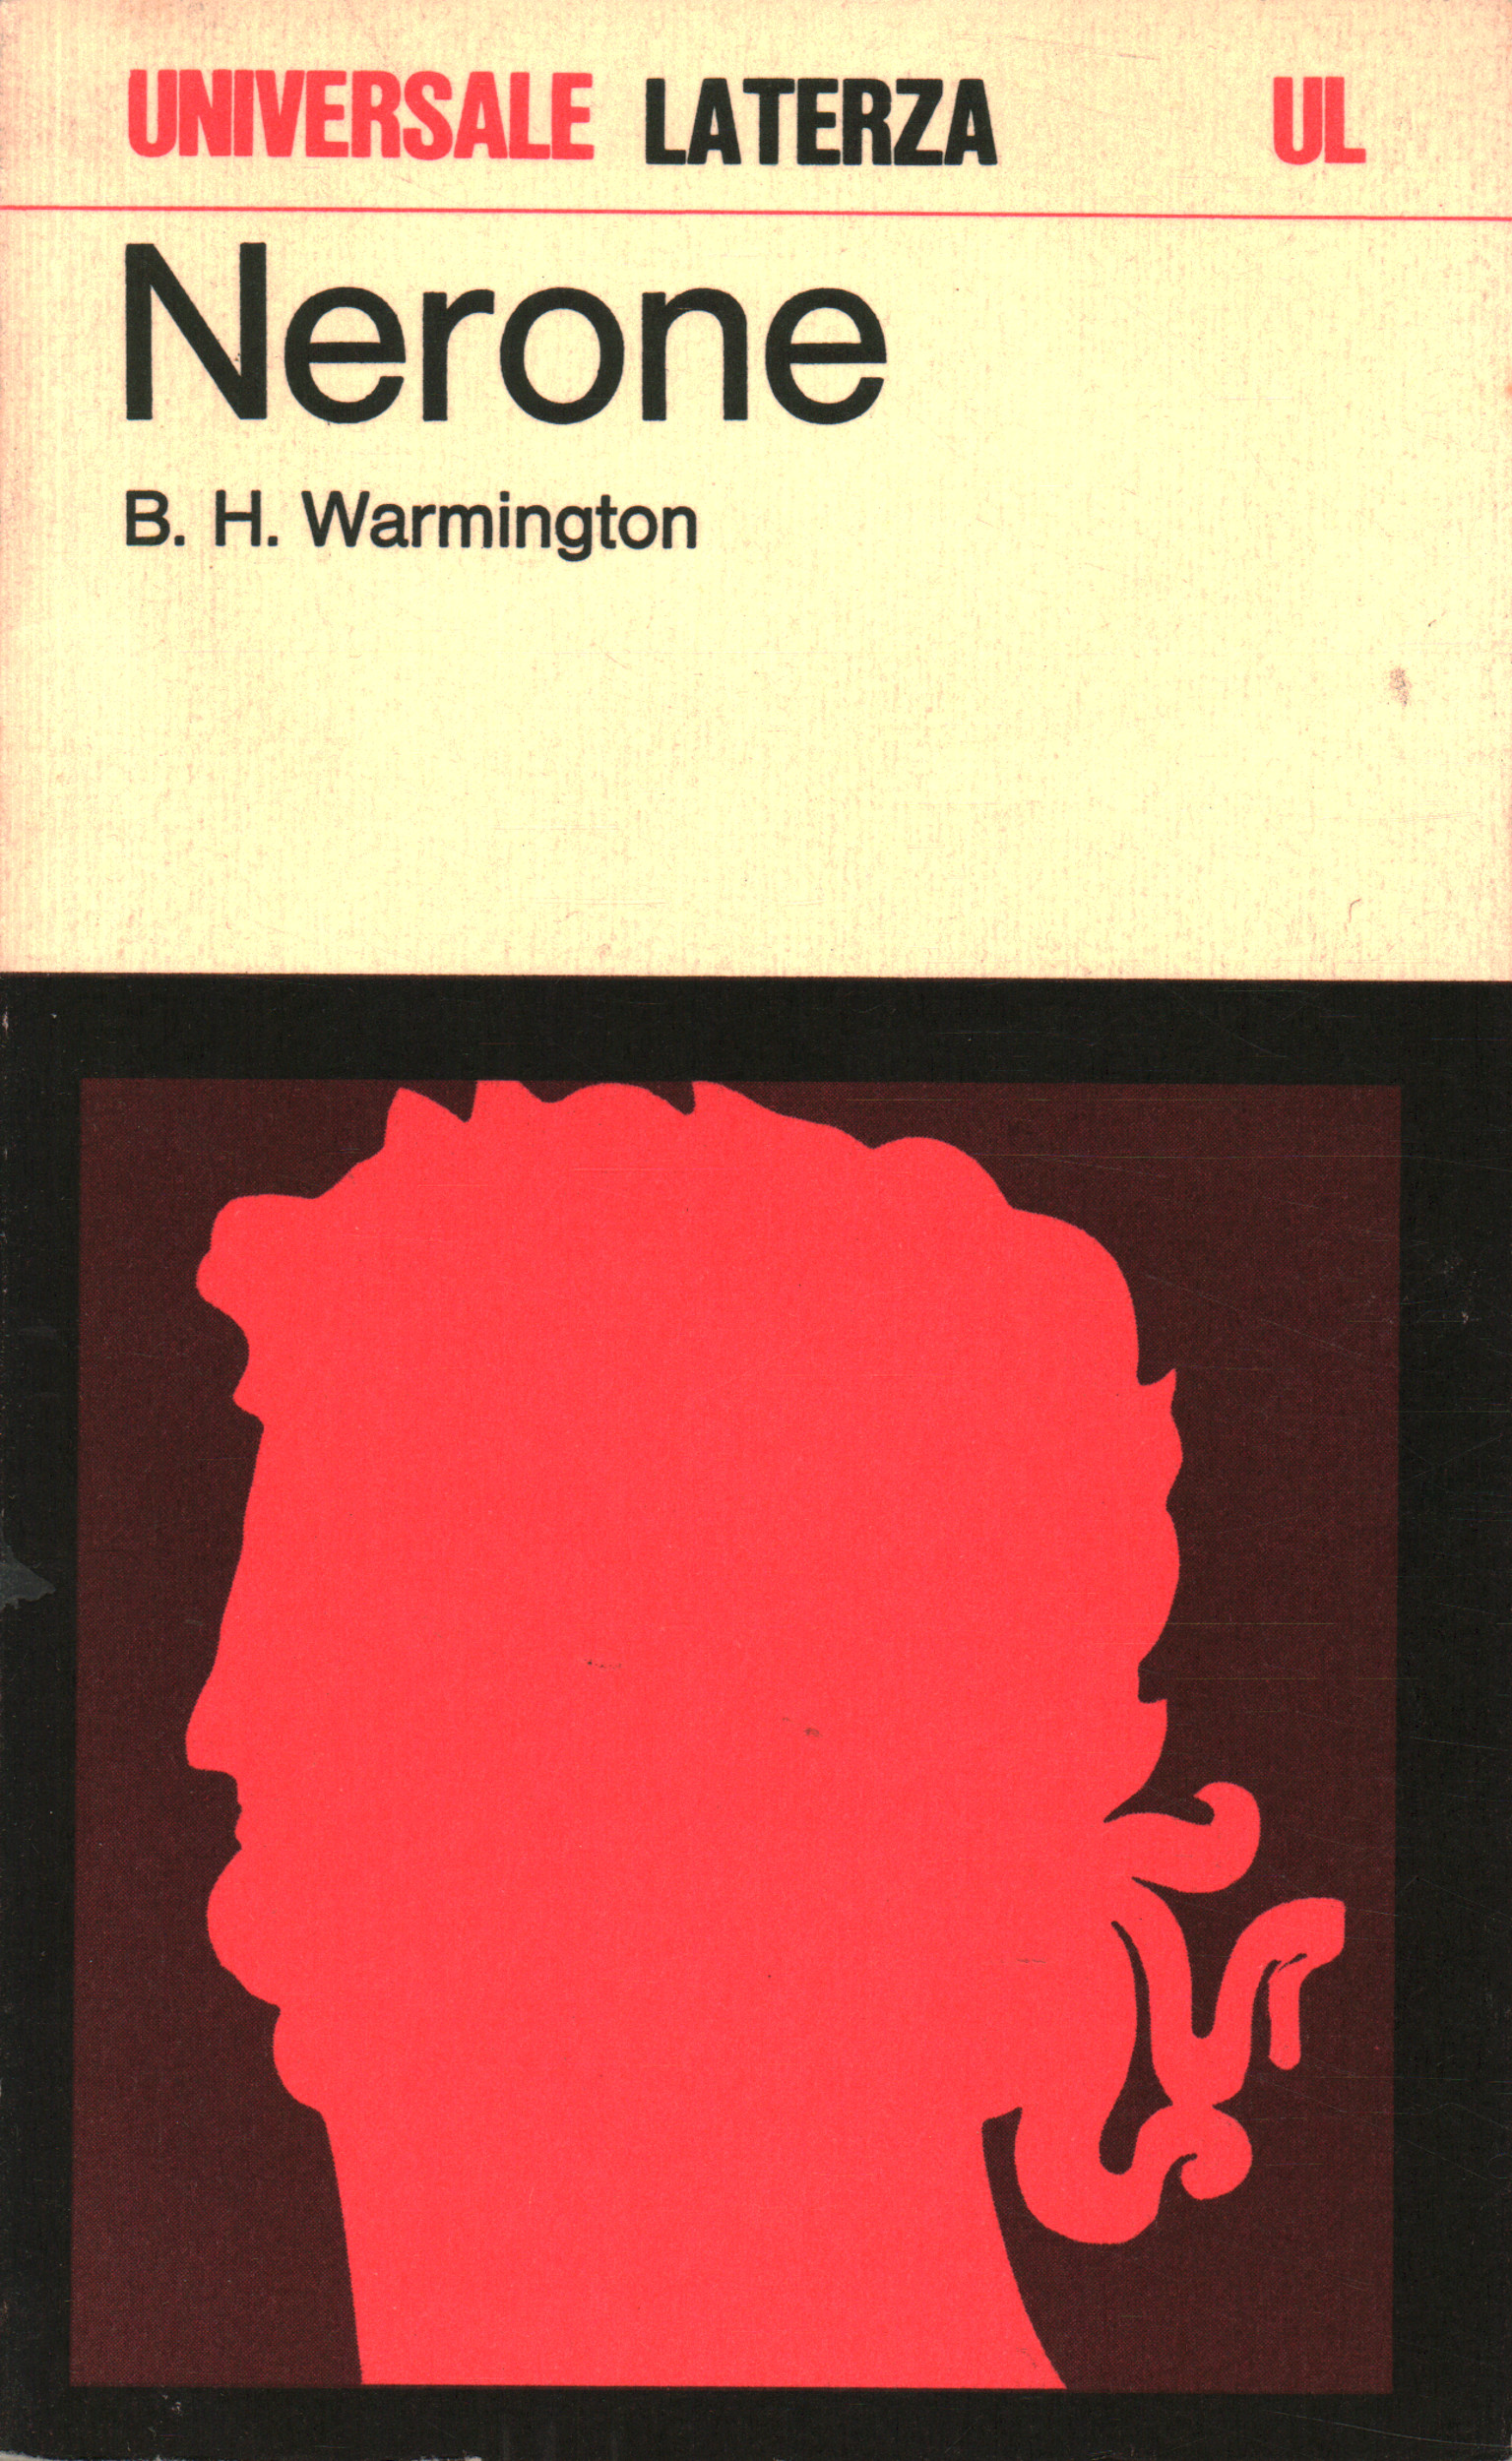 Nerone, B. H. Warmington